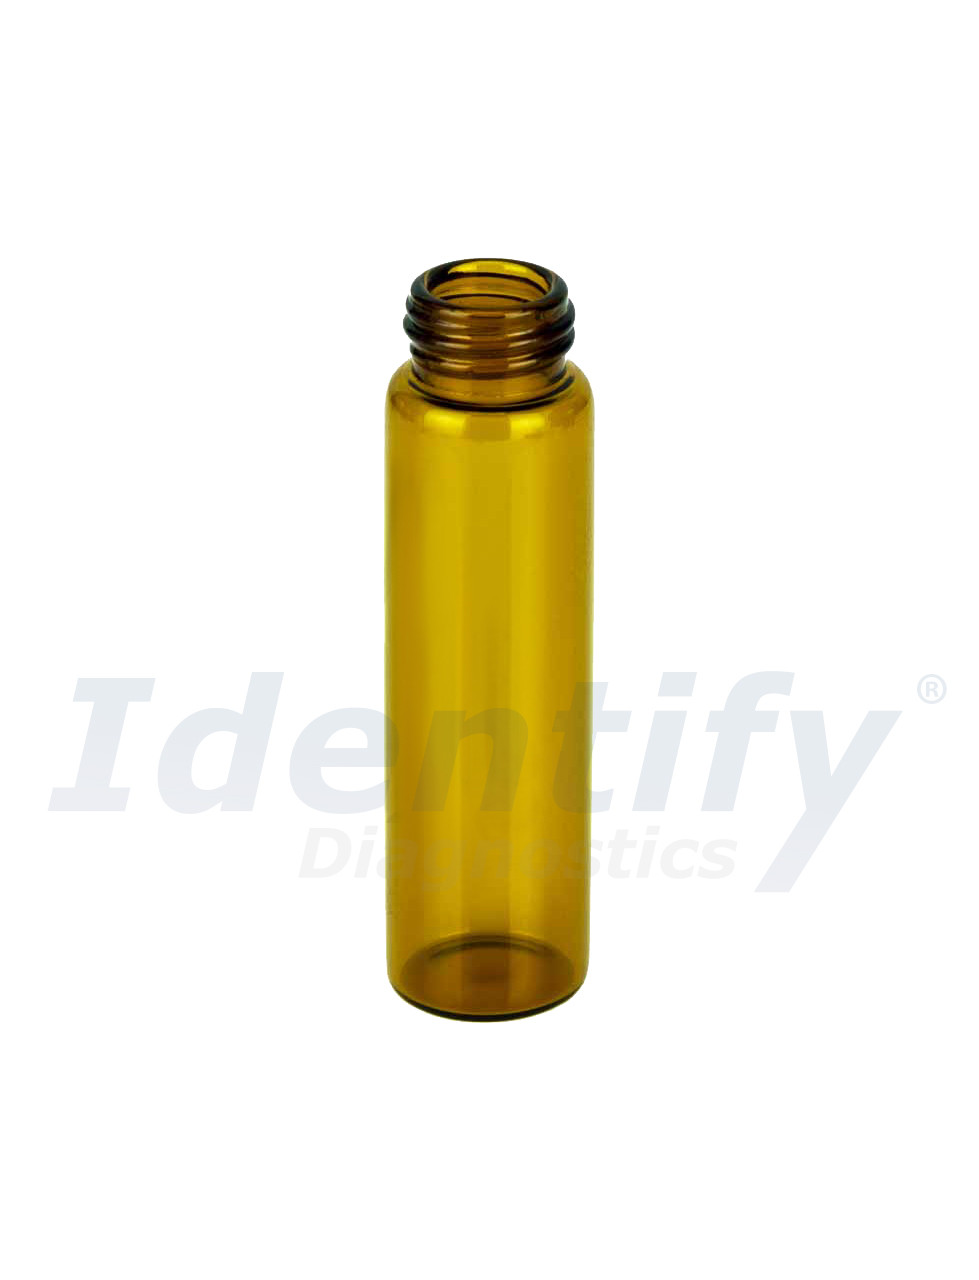 https://cdn11.bigcommerce.com/s-svmxqq8b/images/stencil/1280x1280/products/85/1421/10ml-amber-glass-dram-vial-tube-liquid-bottle-GV010A-2020-ID__54504.1596556136.jpg?c=2